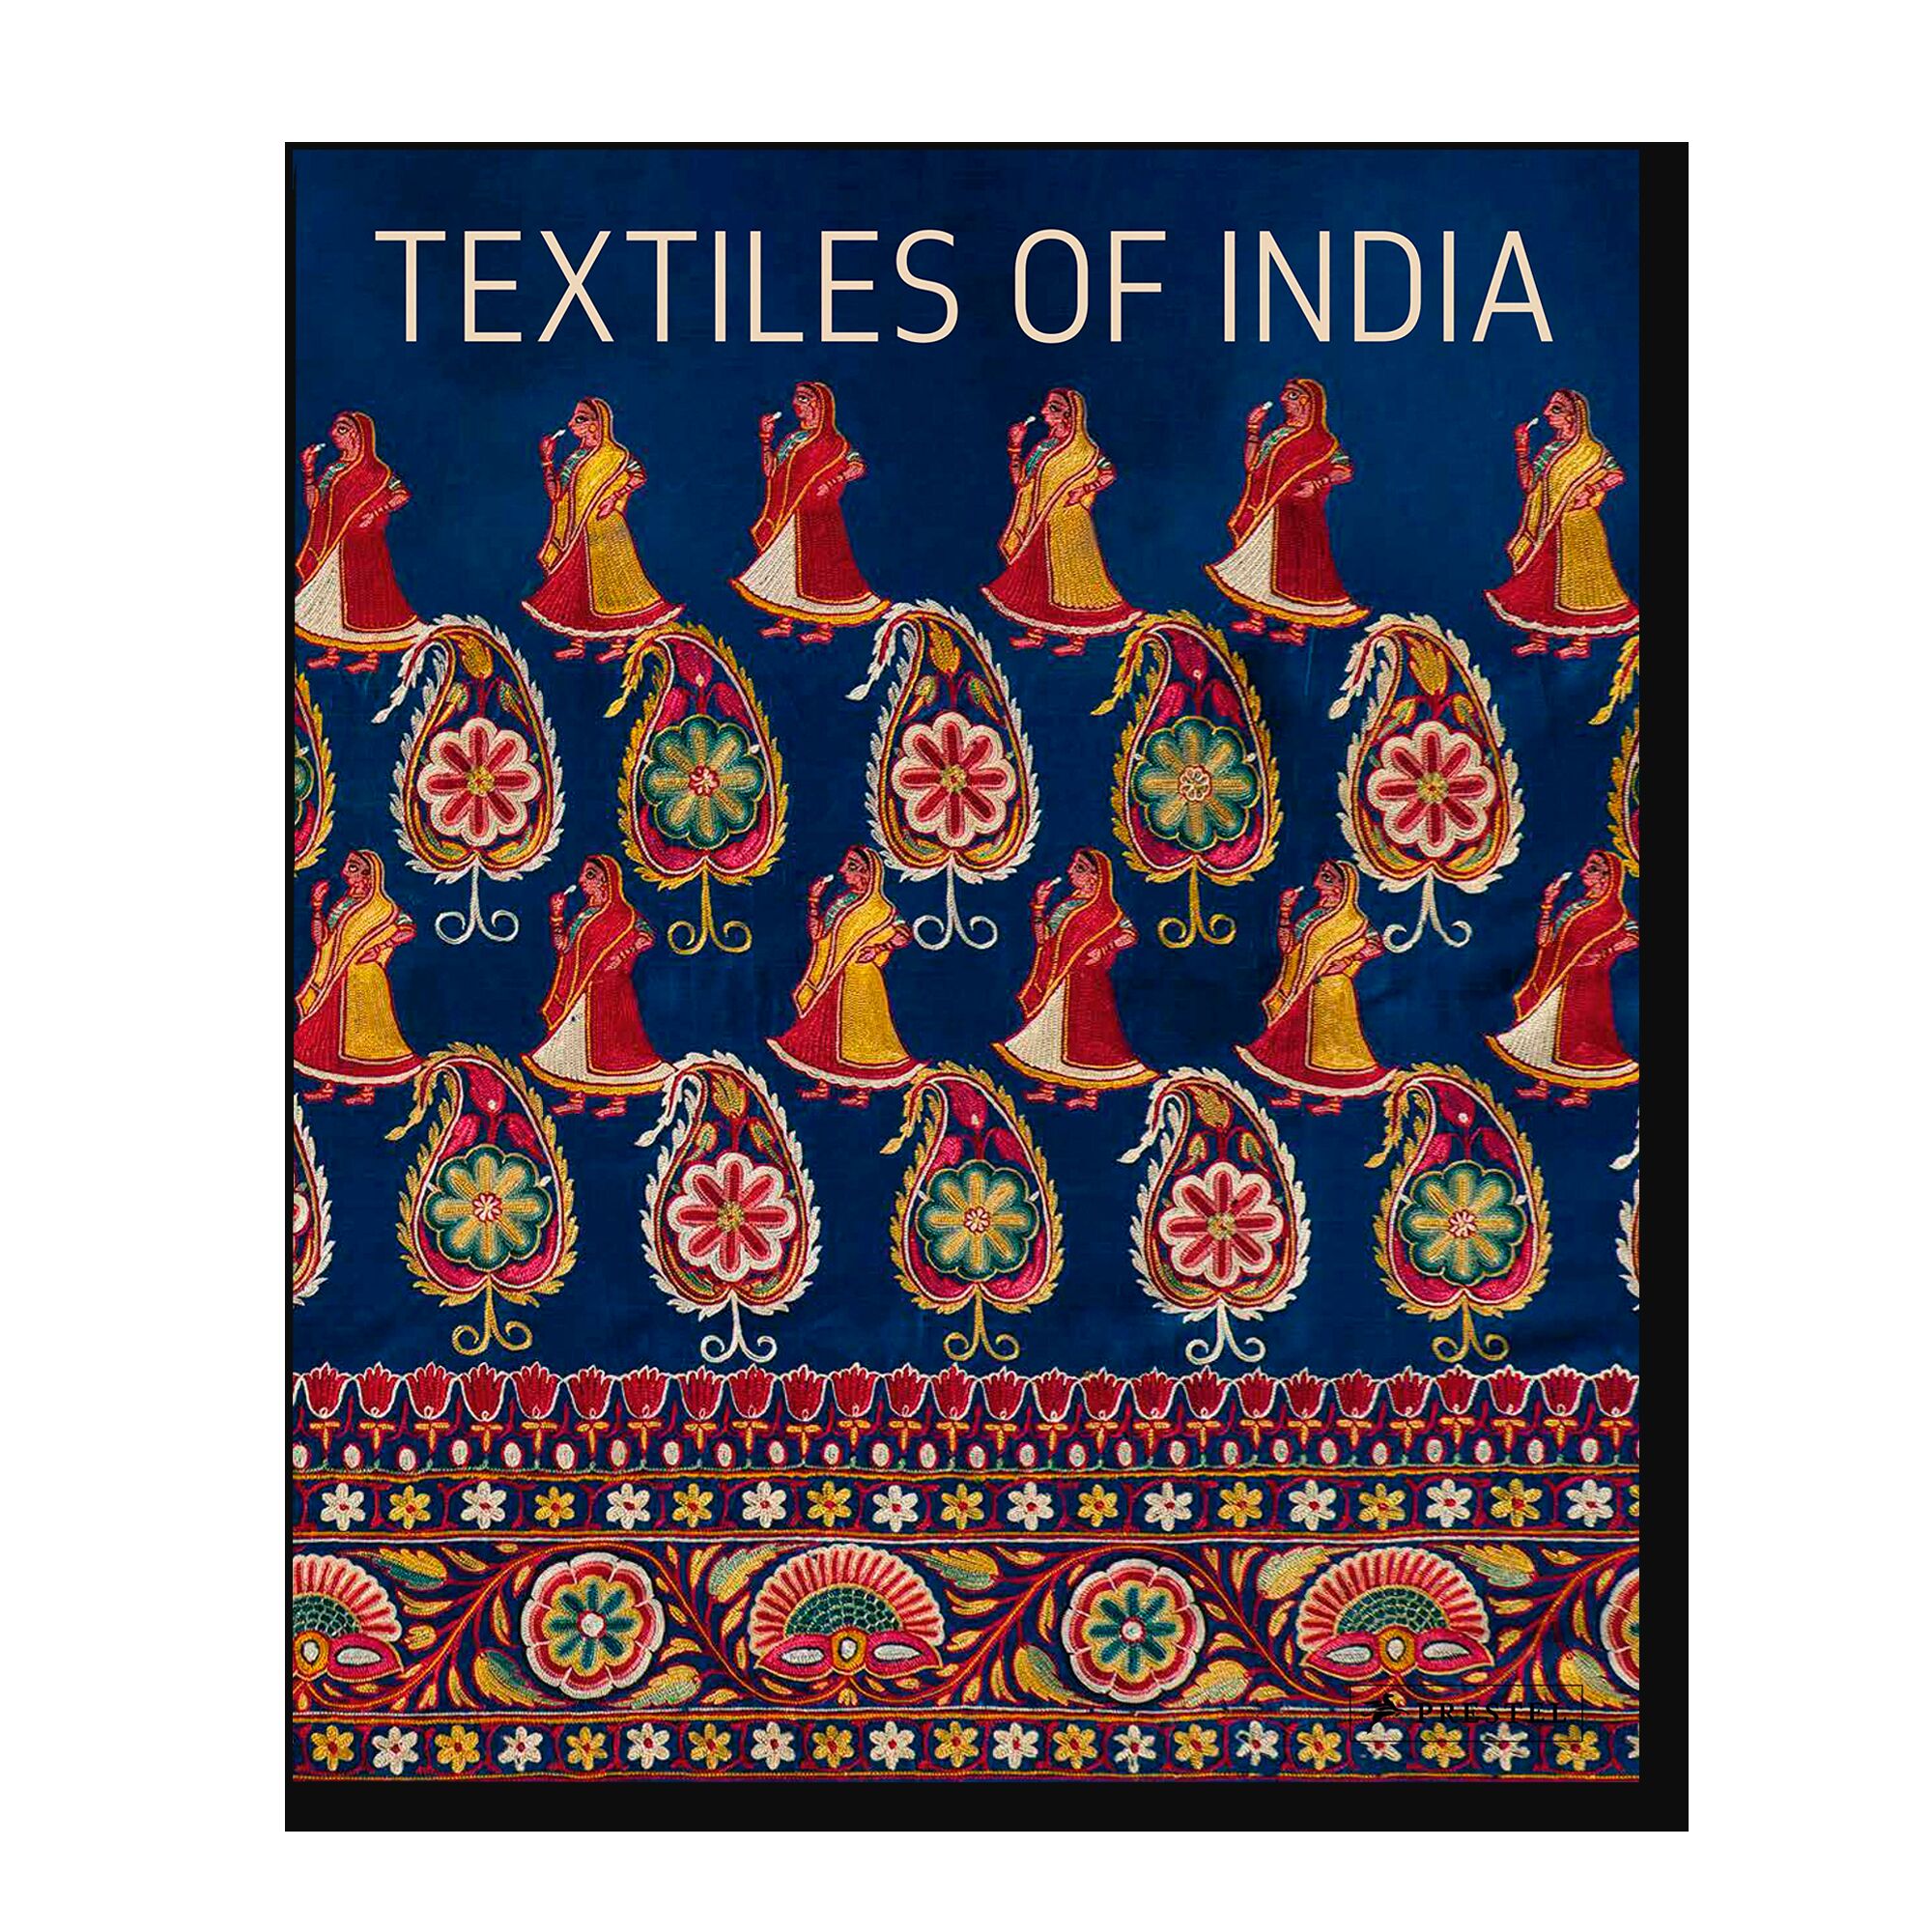 Textiles of India